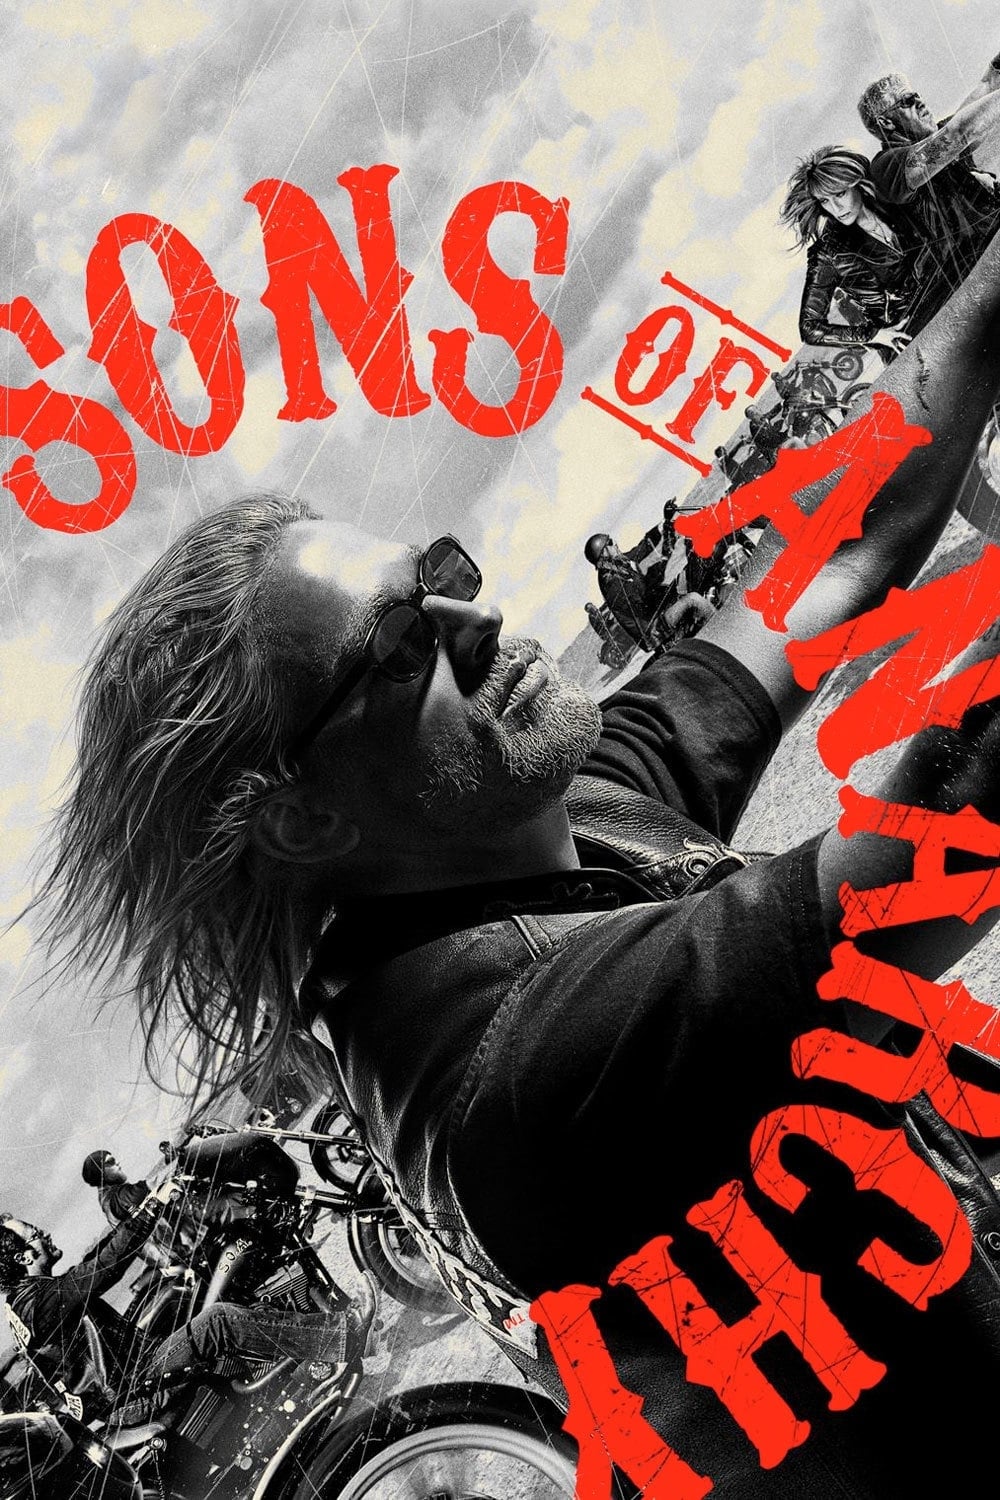 Sons of Anarchy (2008 - 2014) Seizoen 2 Disc 2 BD50